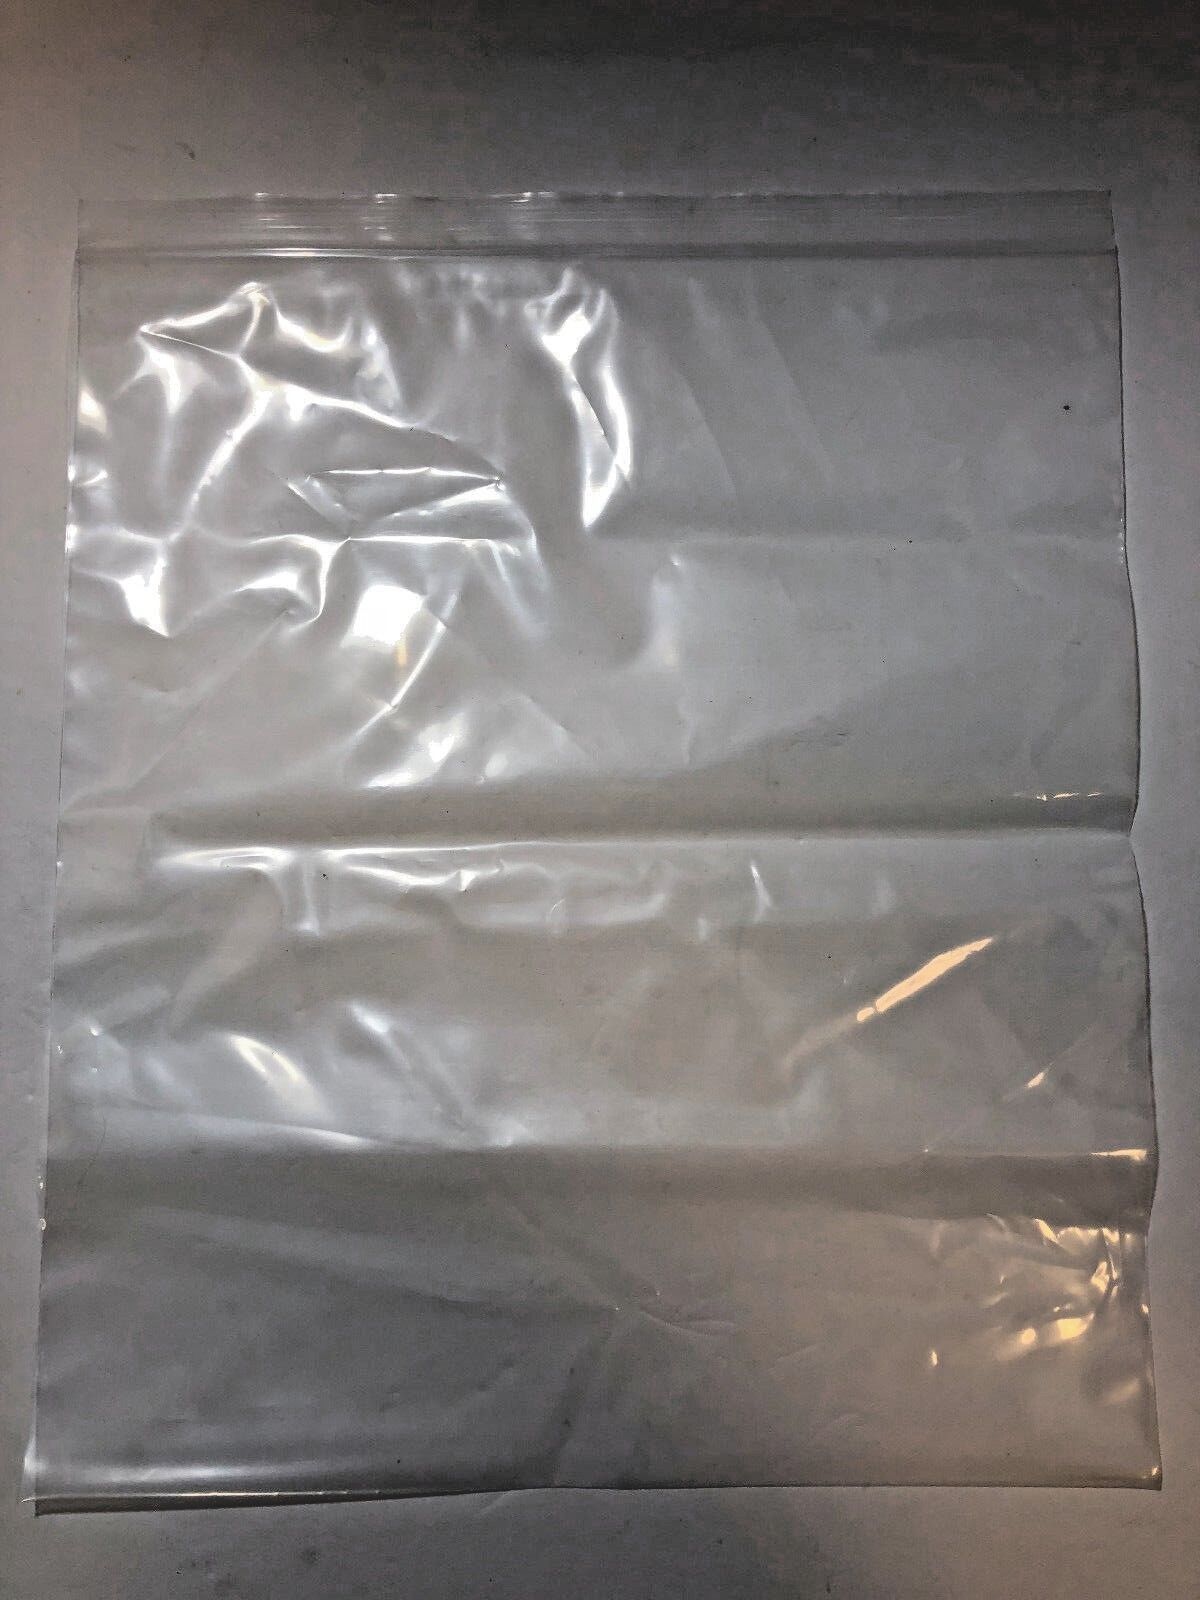 12 x 14 inch 4 Mil Clear Plastic Resealable Reclosable Zip Zipper Seal Top Bag